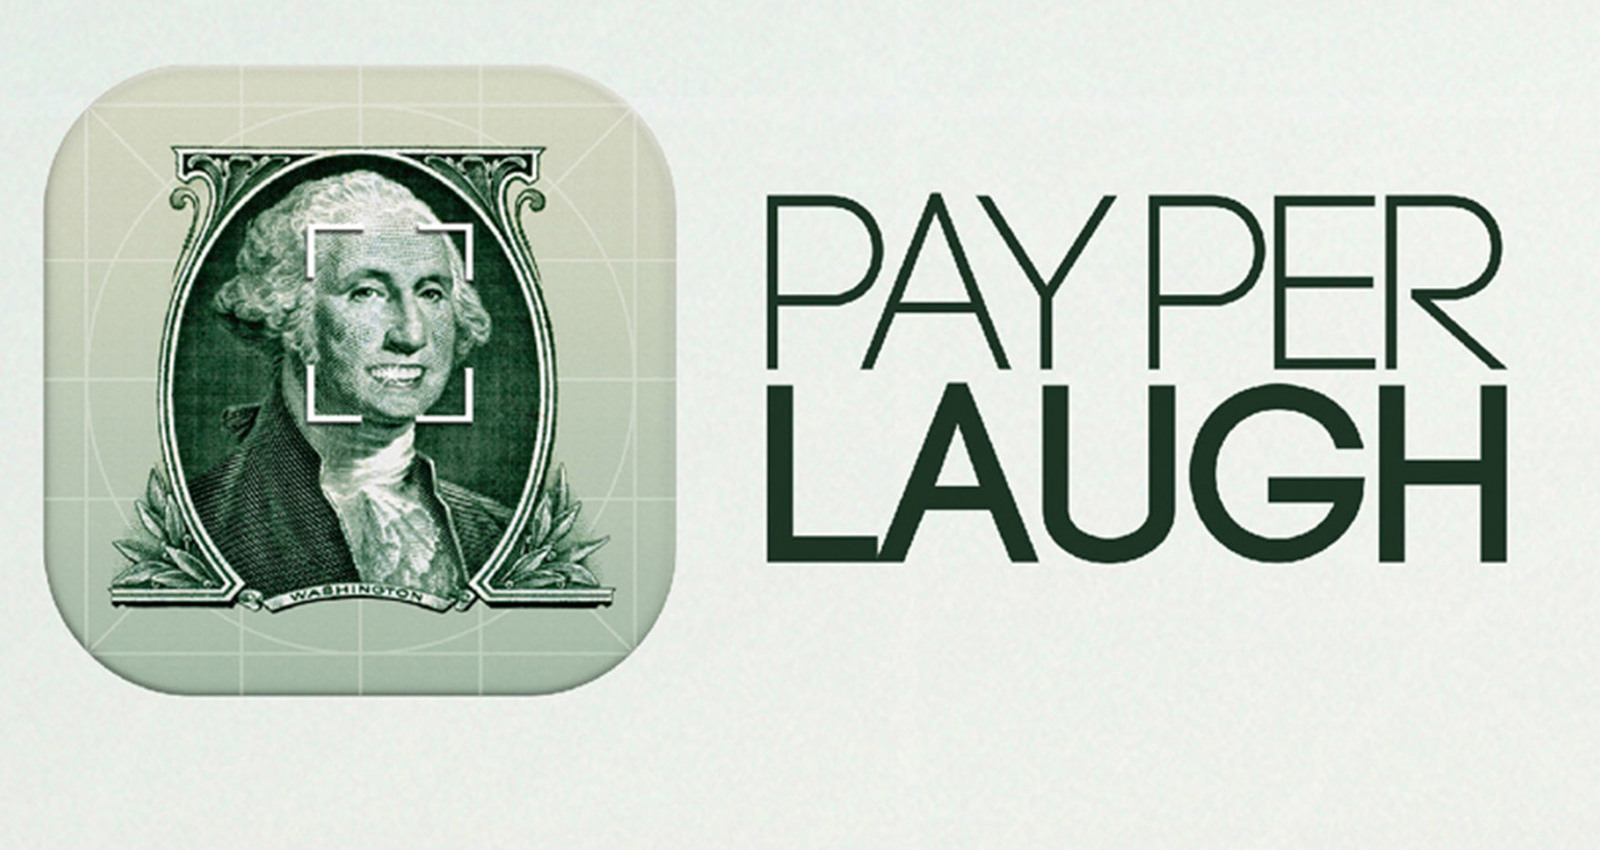 Pay Per Laugh